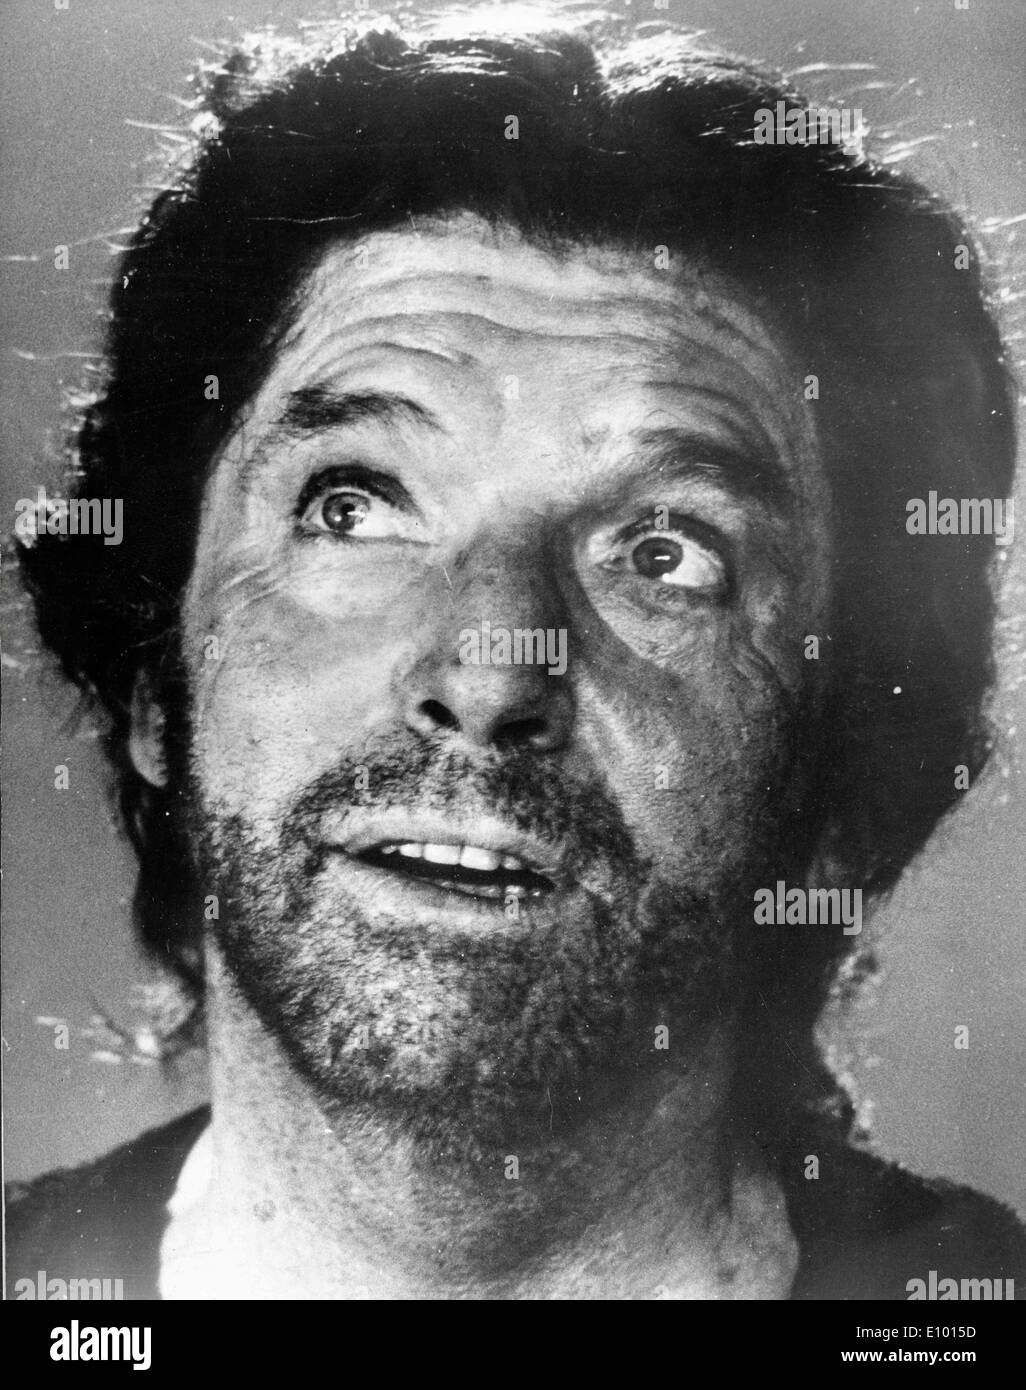 Actor Burt Lancaster as Moses Stock Photo